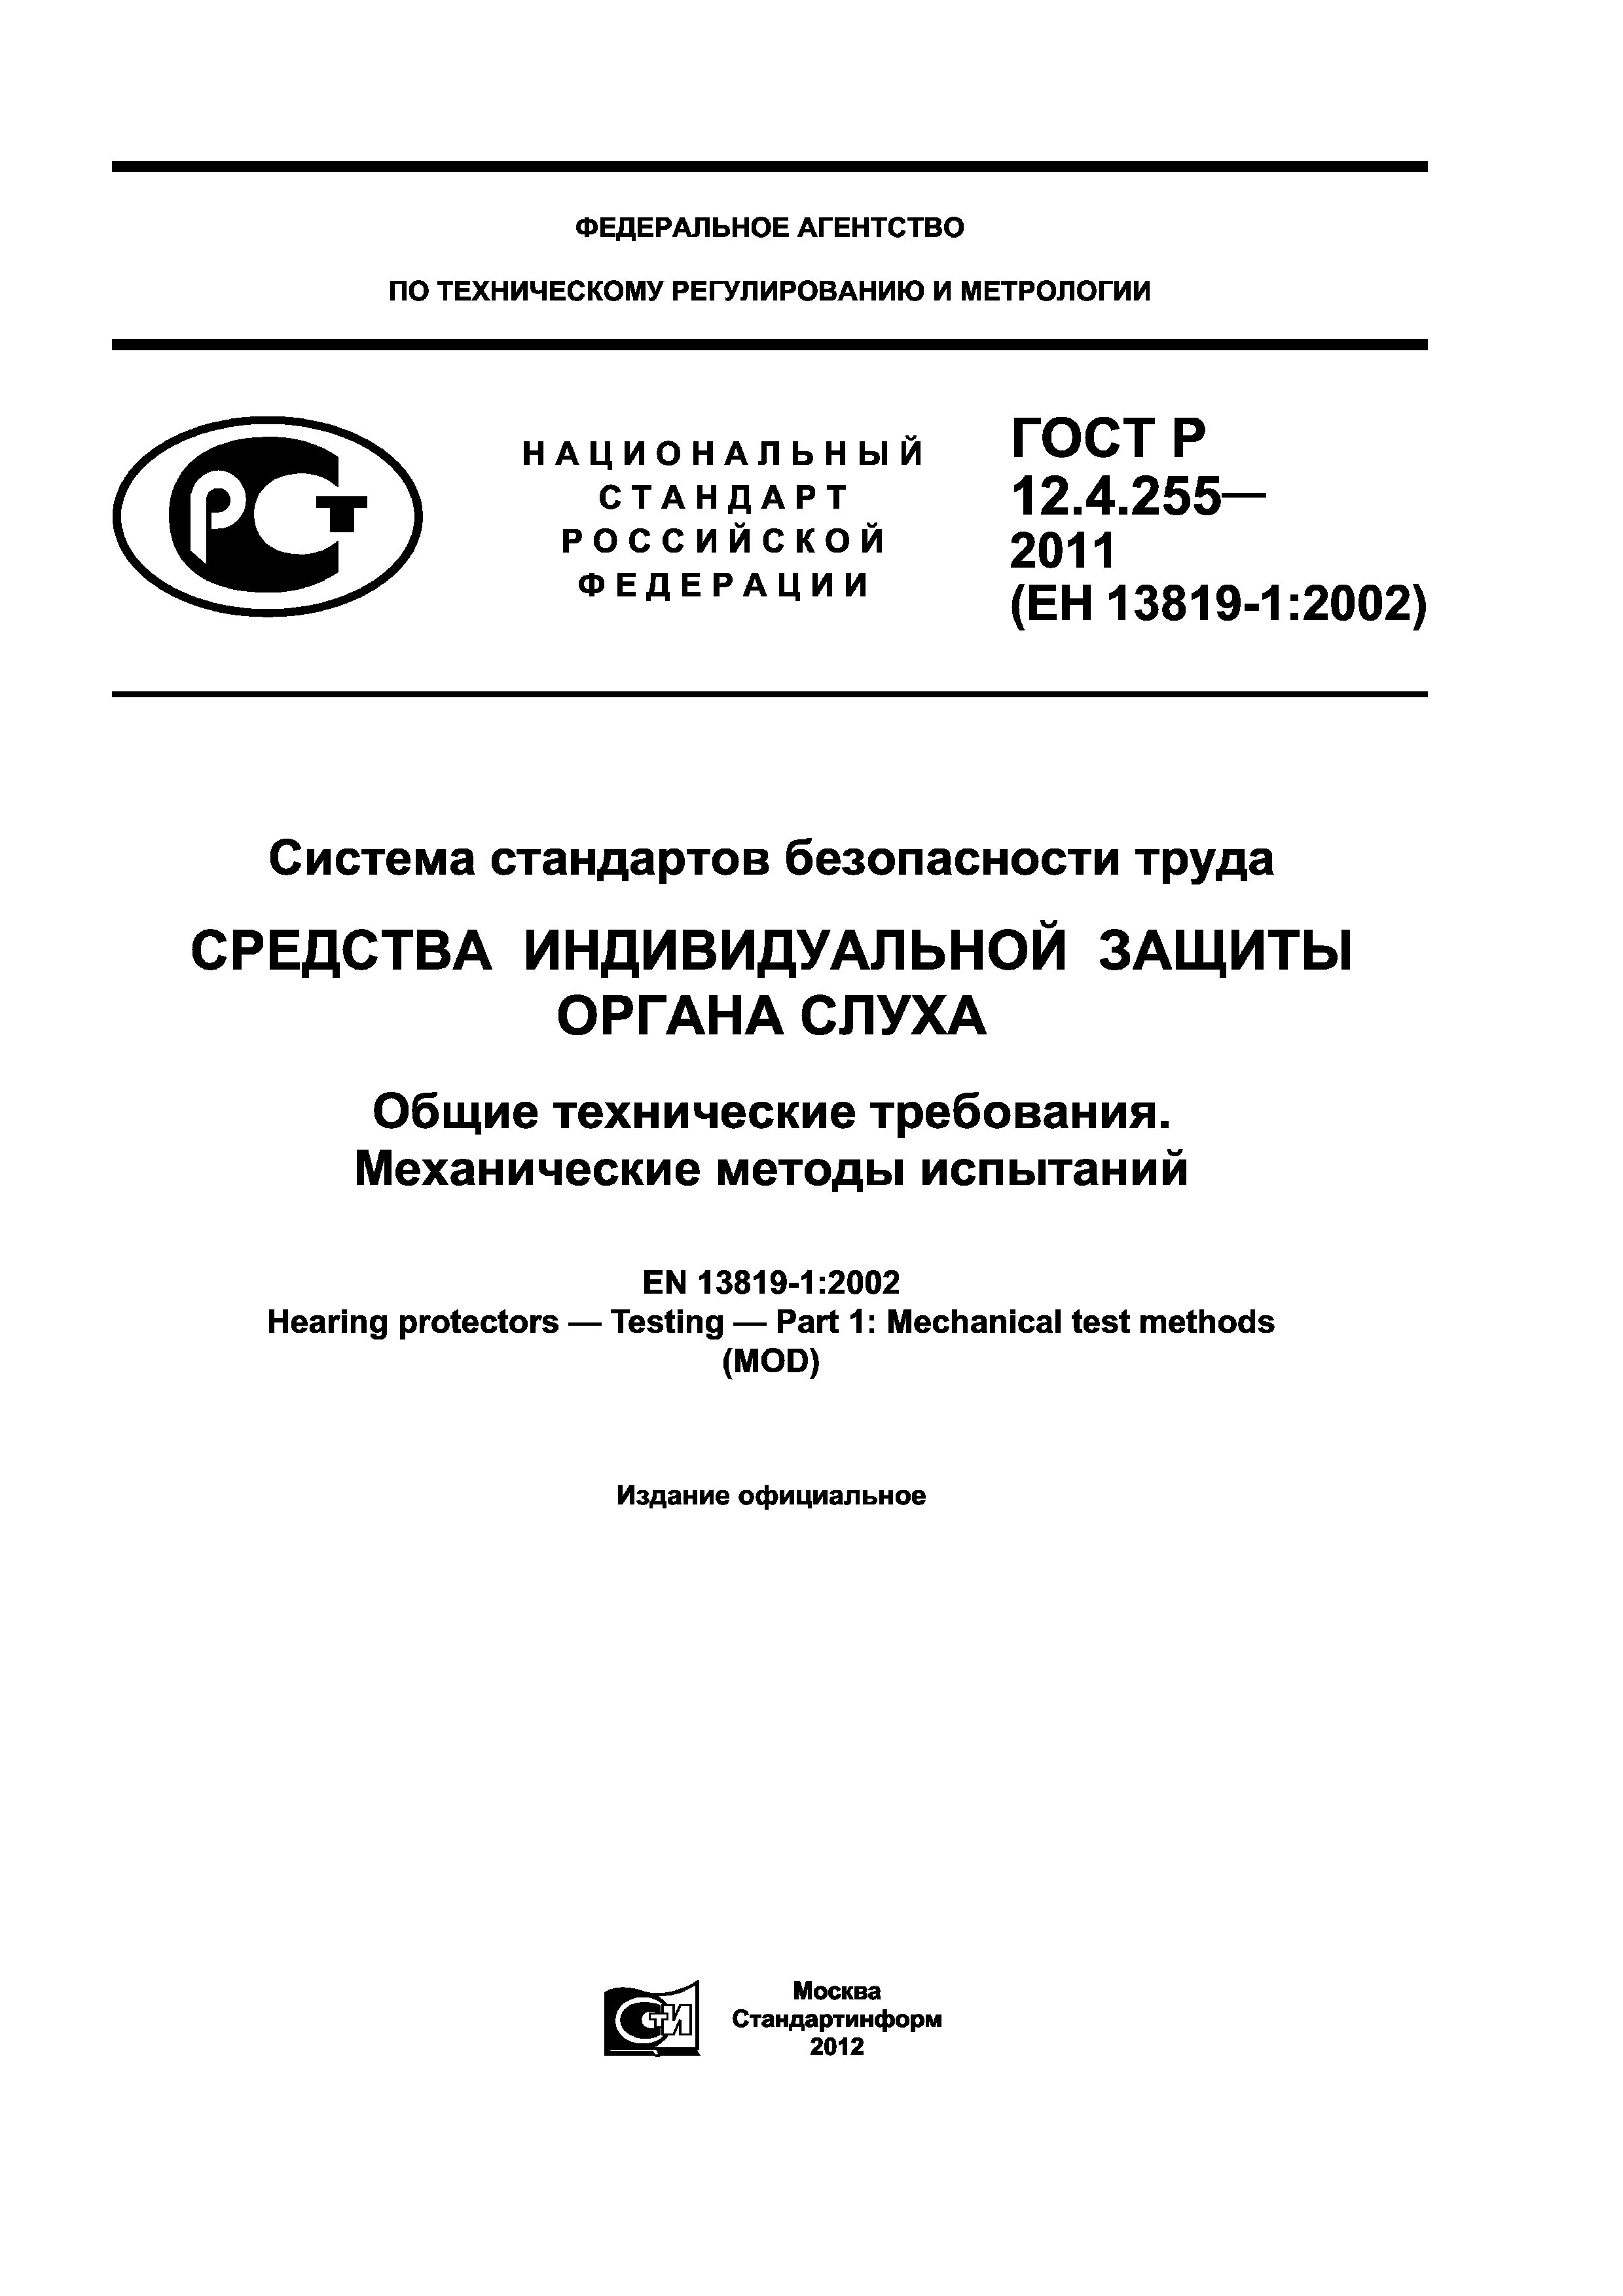 ГОСТ Р 12.4.255-2011